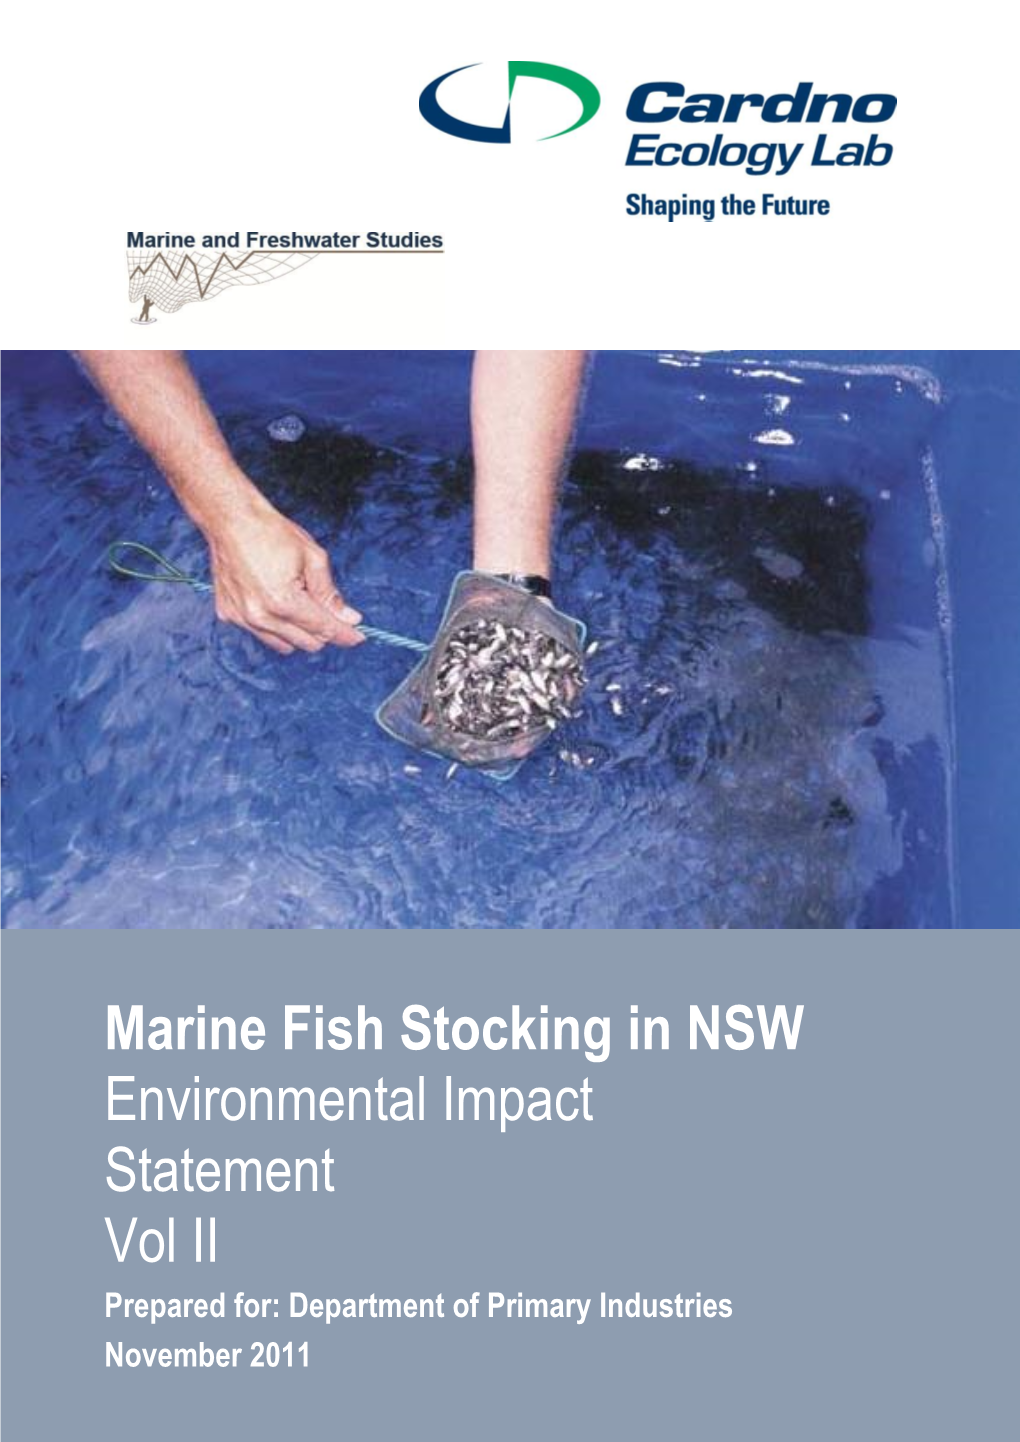 Marine Fish Stocking Environmental Impact Statement